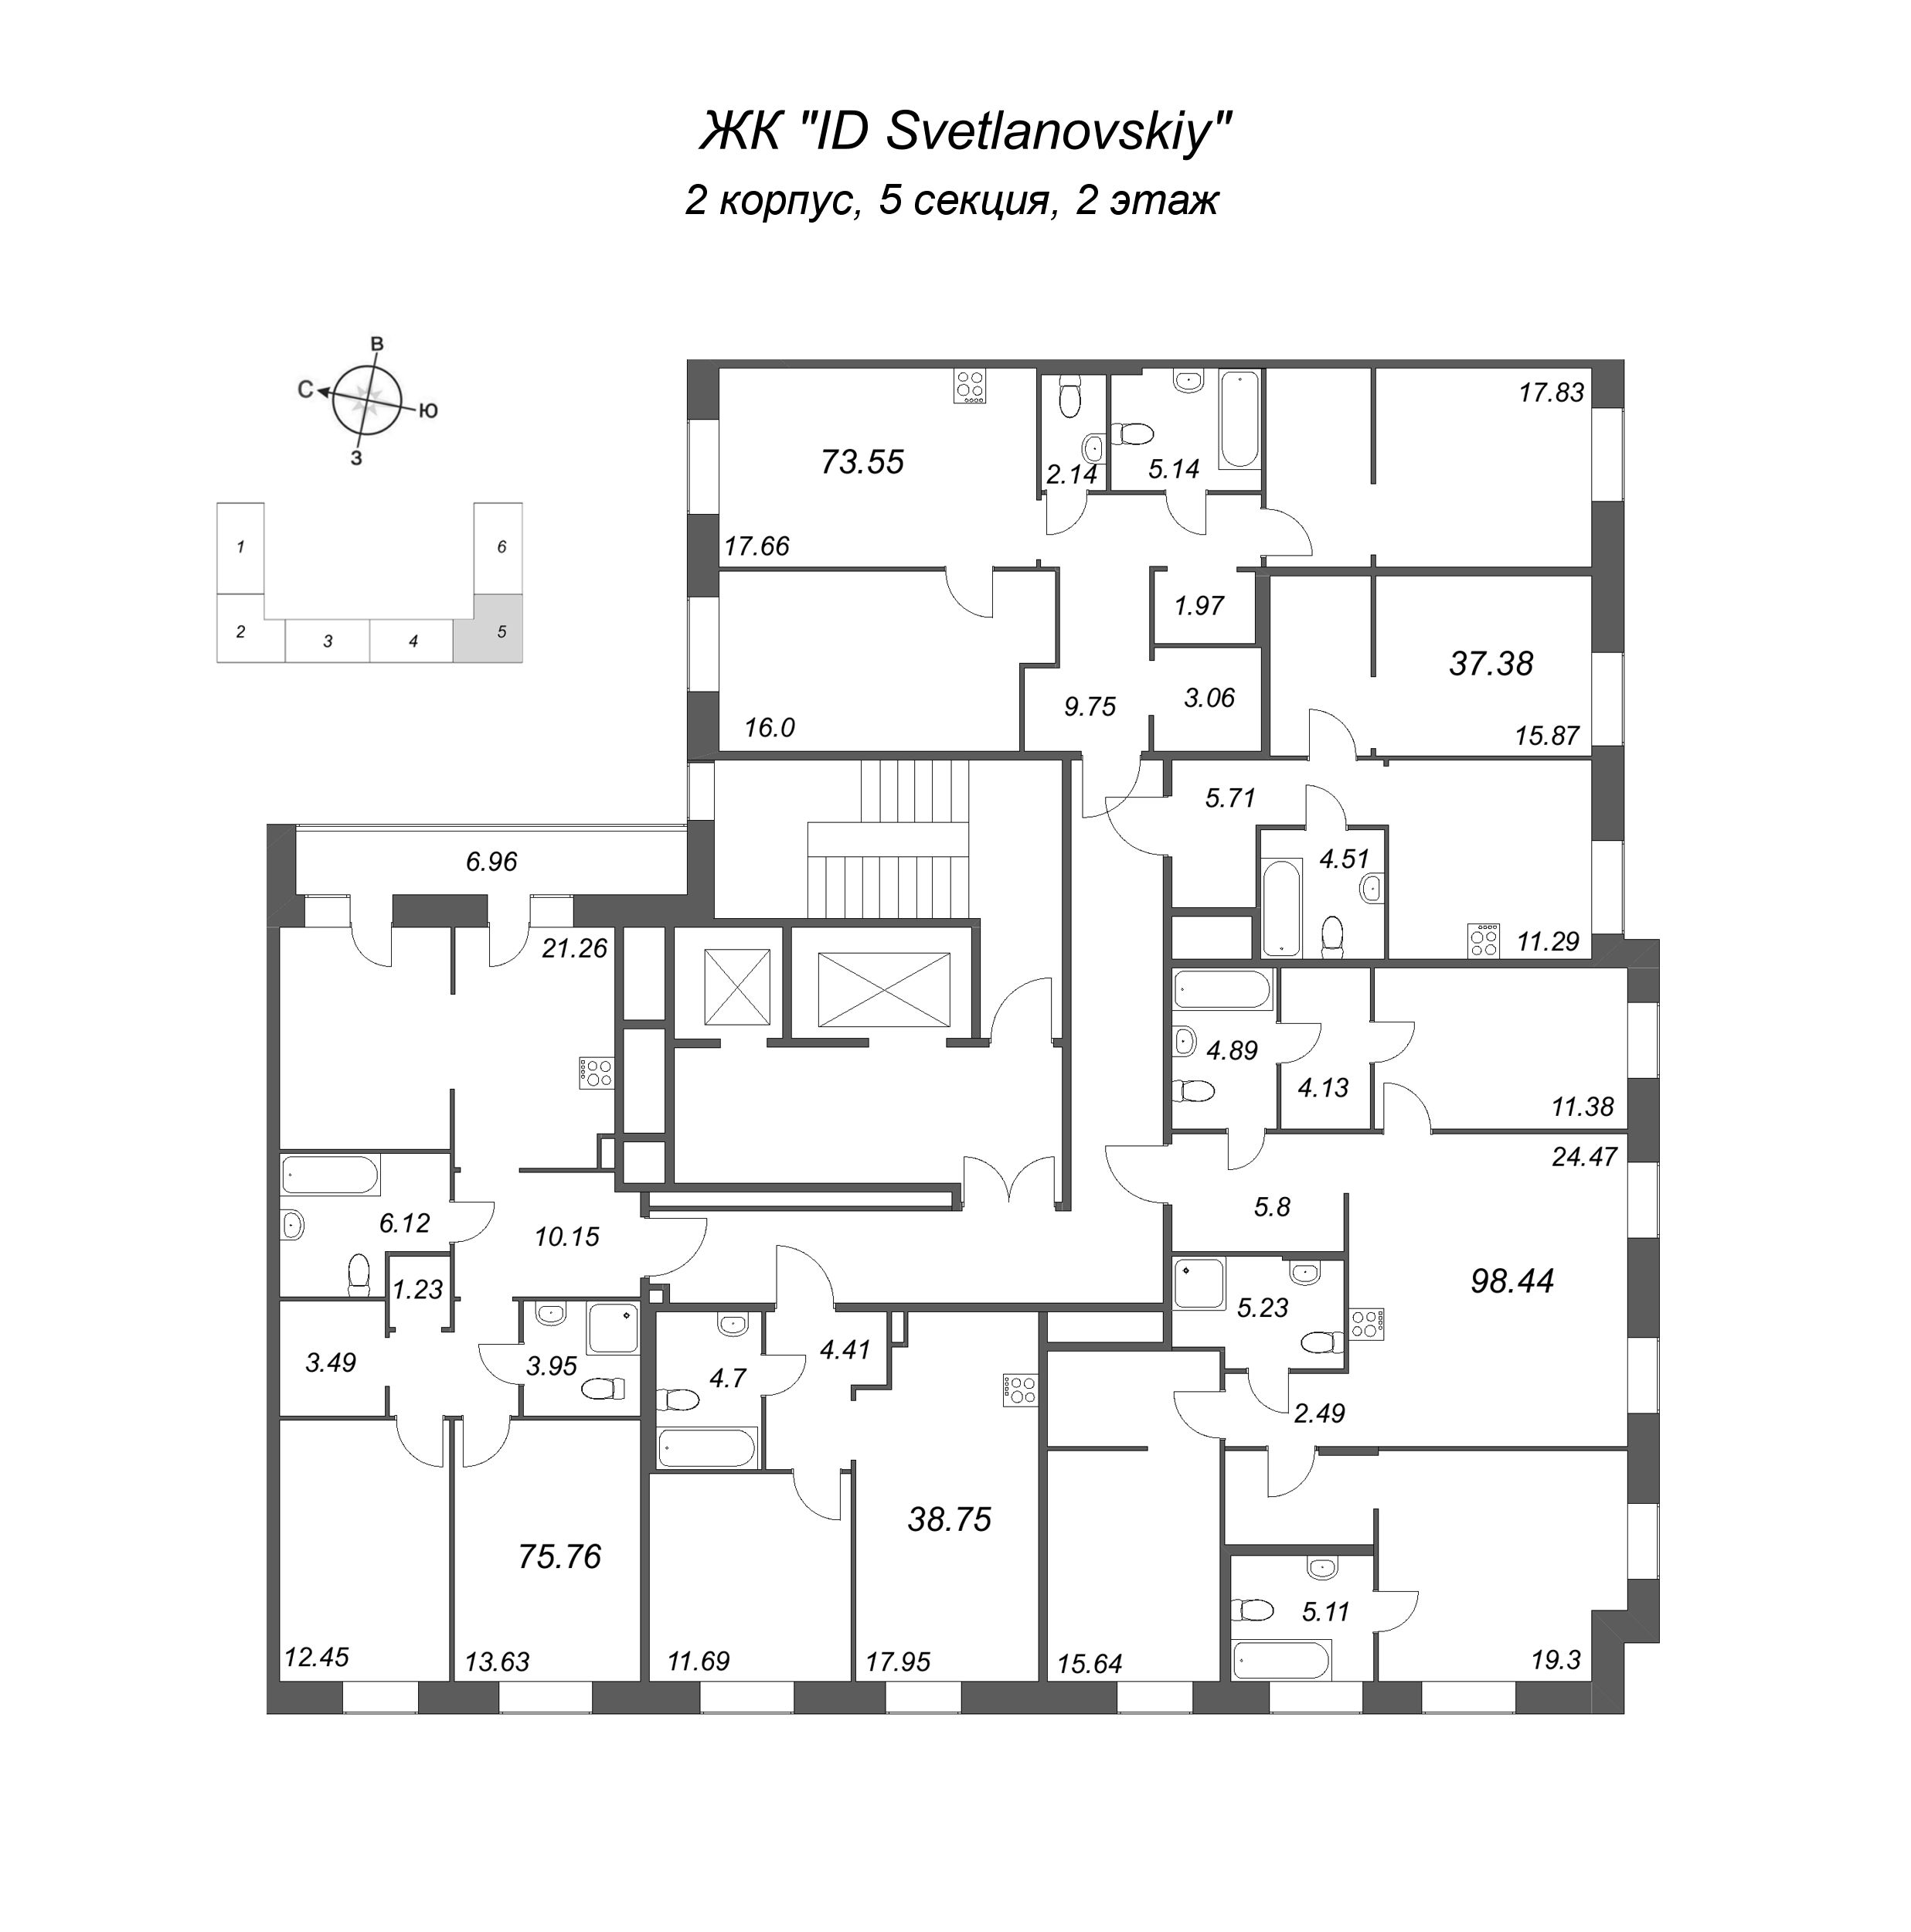 4-комнатная (Евро) квартира, 98.44 м² - планировка этажа